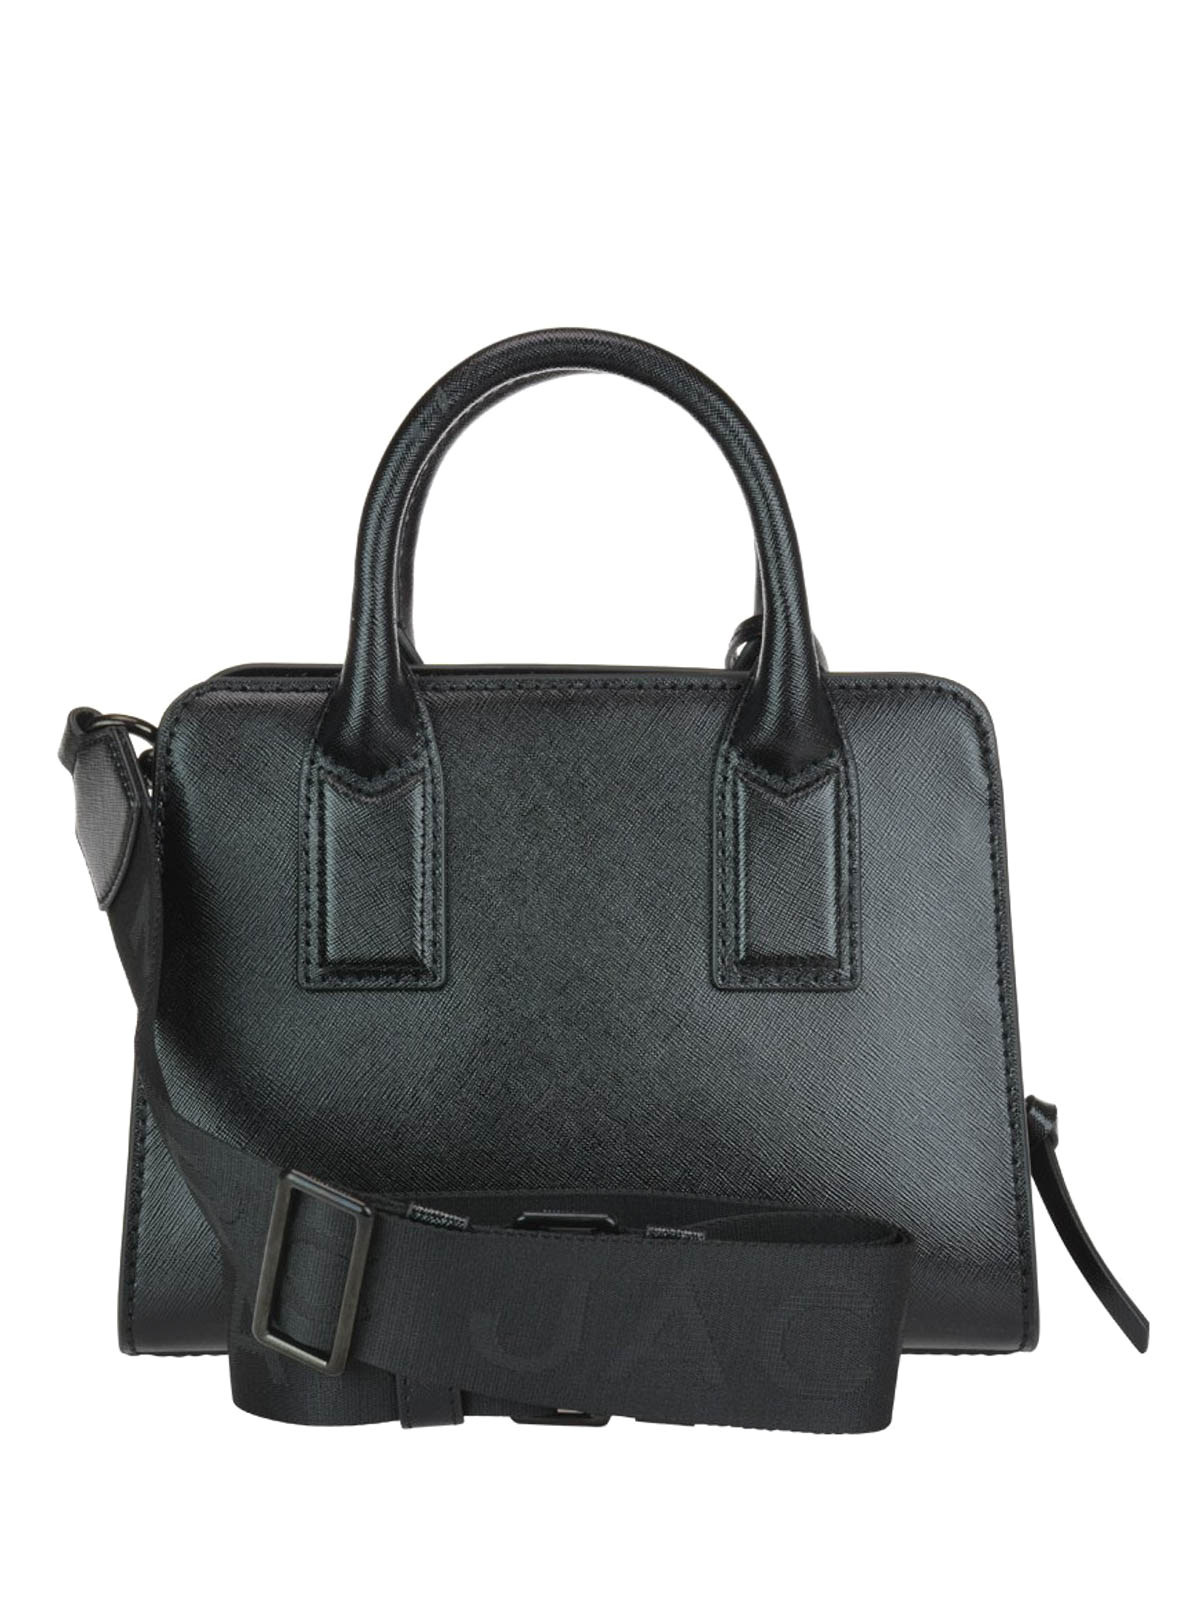 Totes bags Marc Jacobs - Big Shot DTM S black leather tote bag - M0014866001